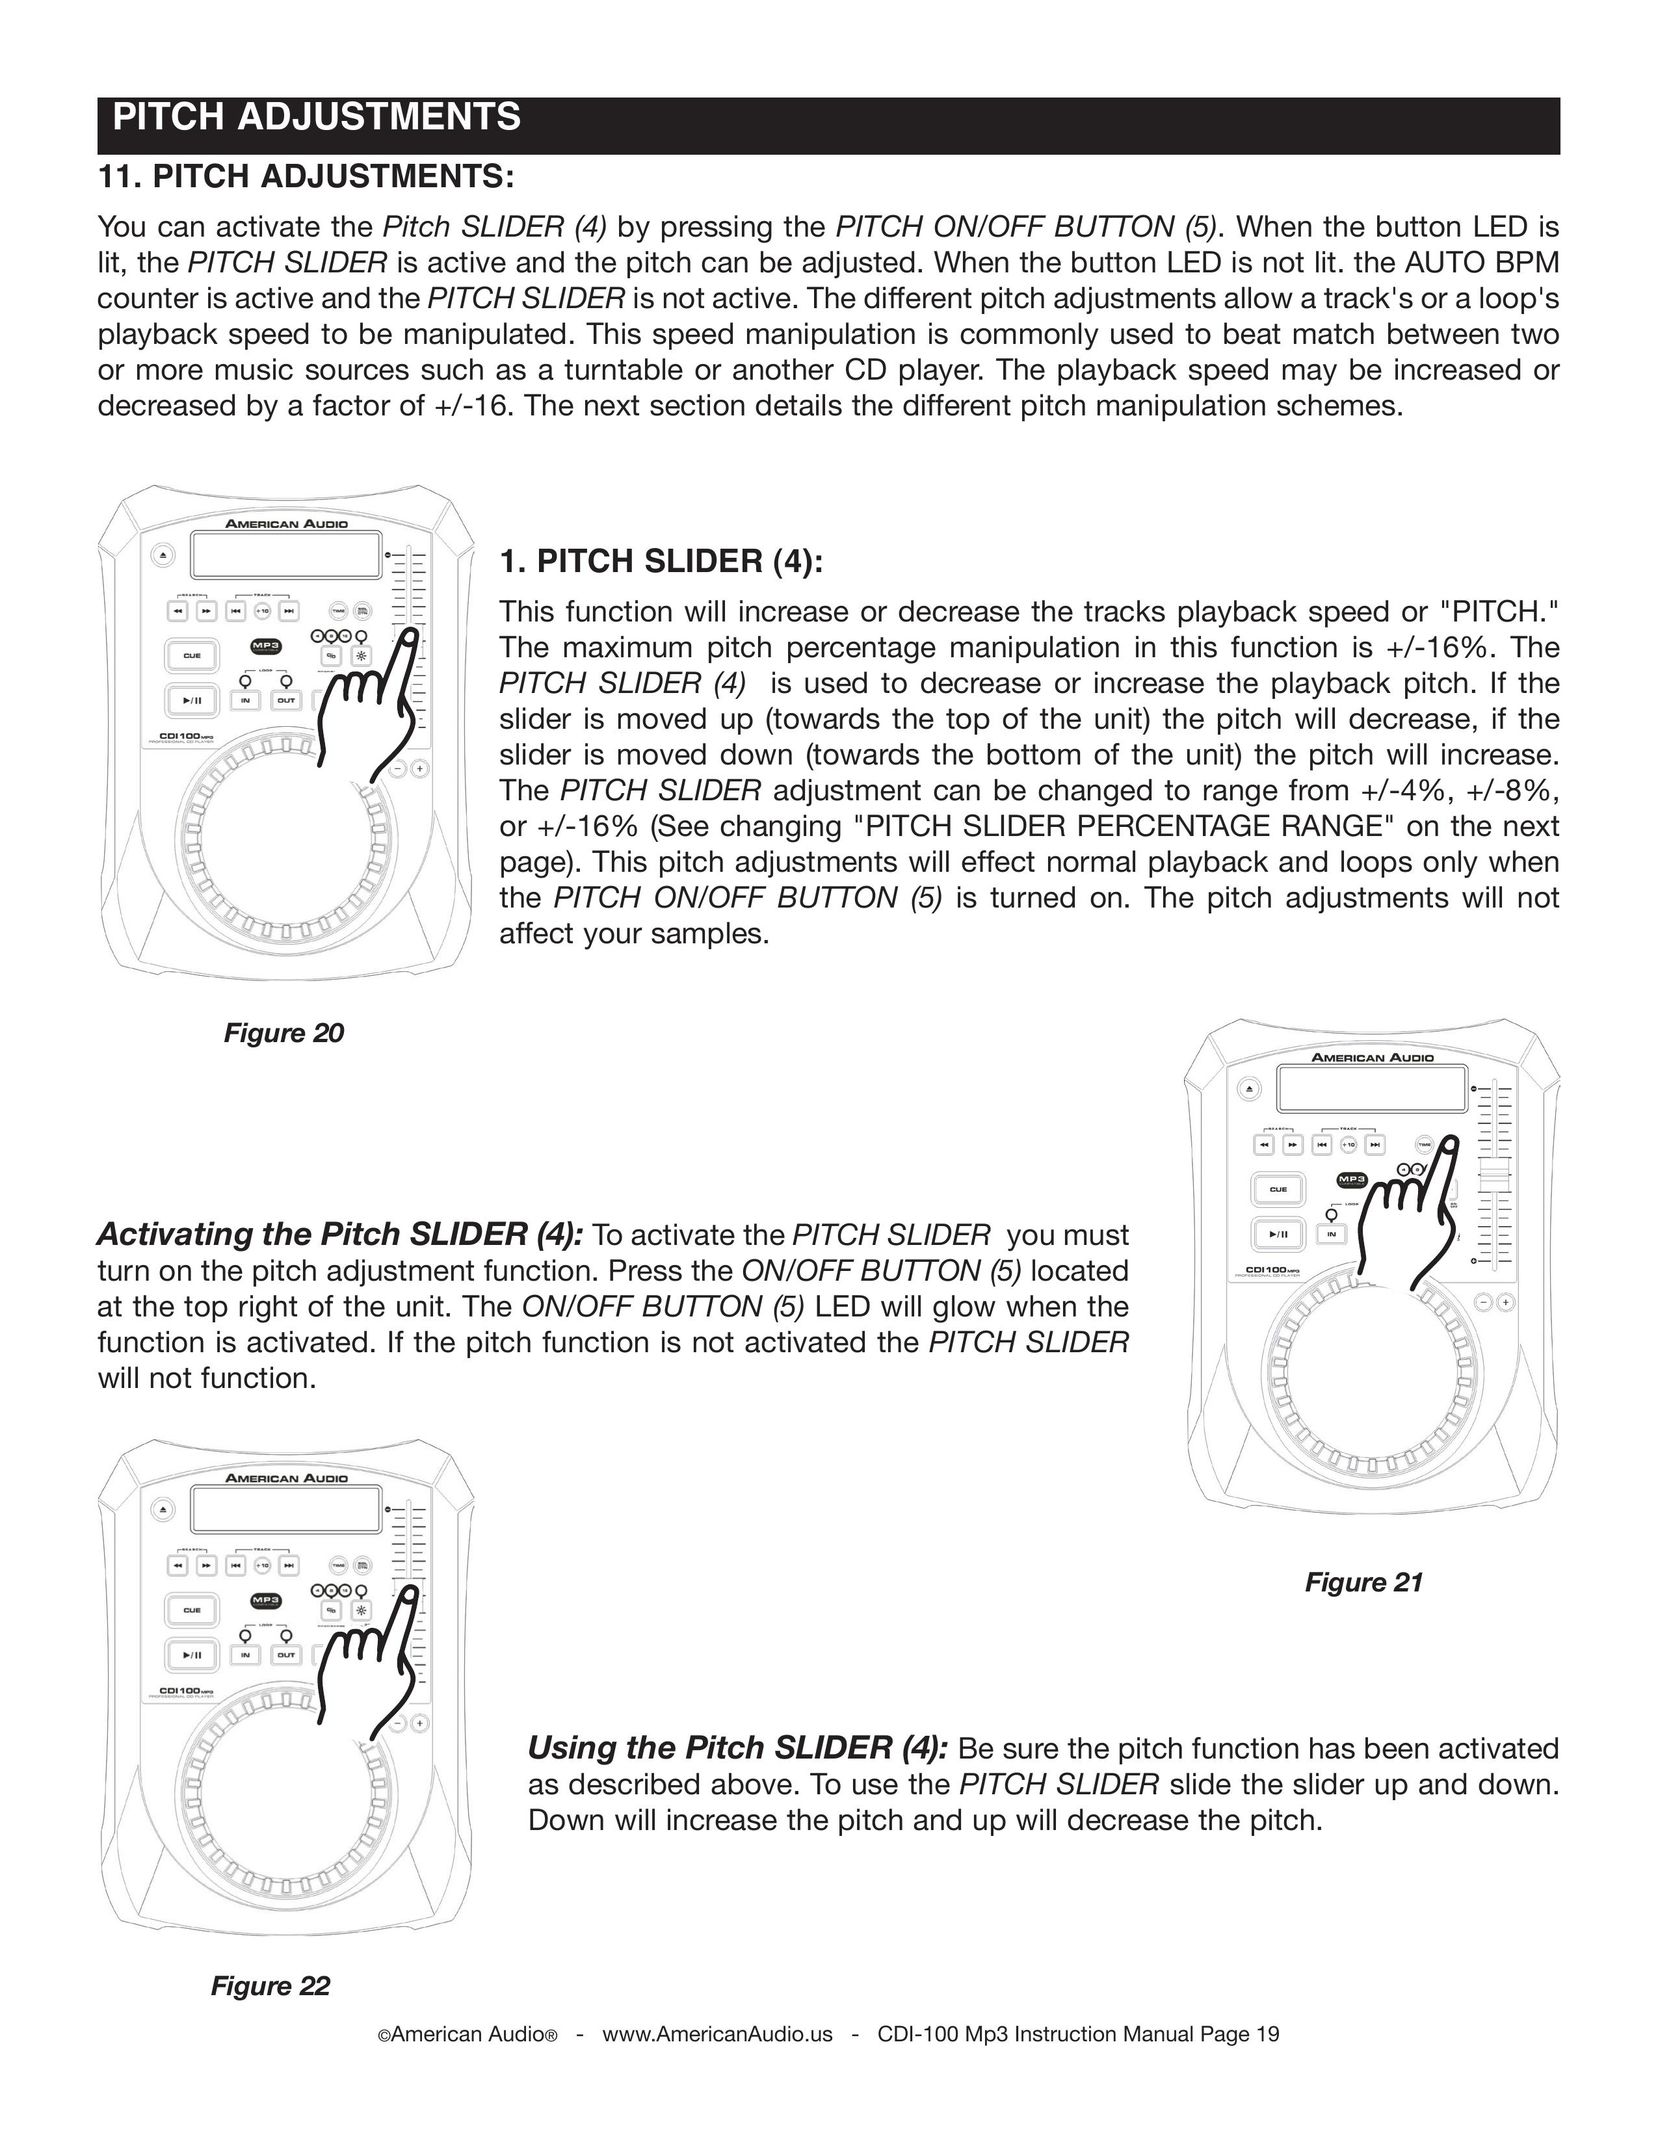 American Audio CDI-100 CD Player User Manual (Page 19)